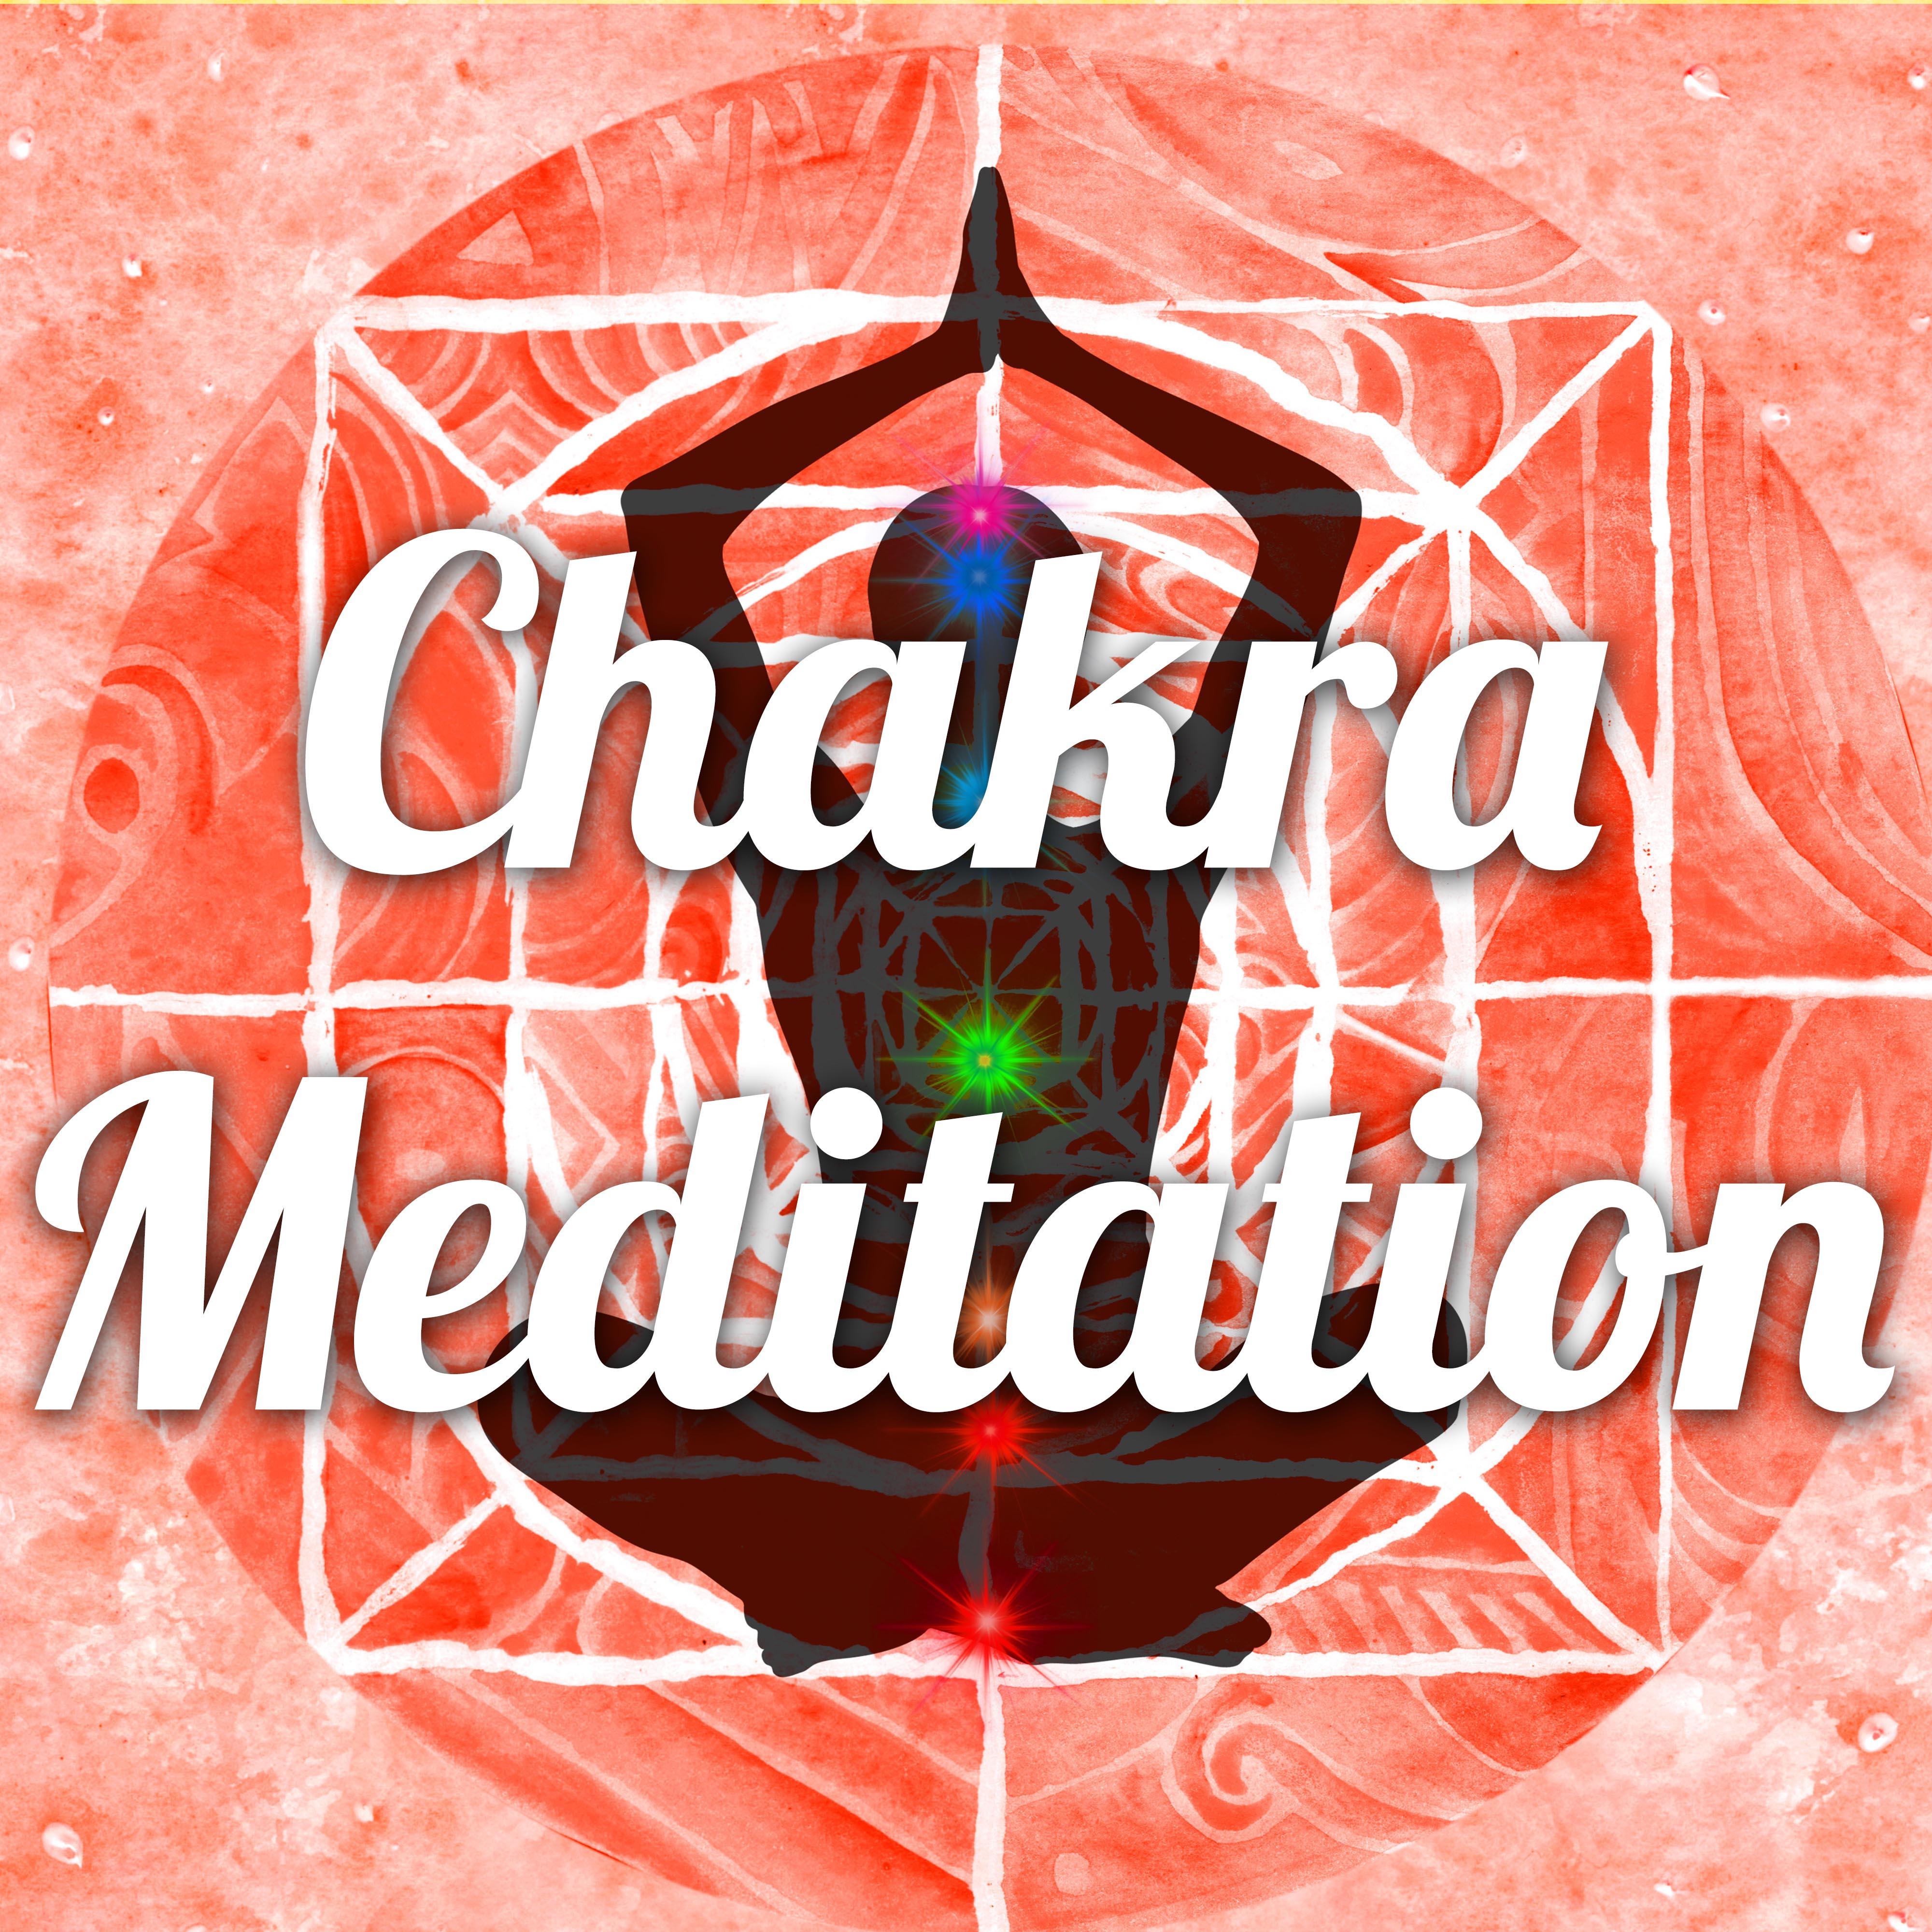 Chakra Meditation - Buddhist Meditation Music for your 7 Chakras